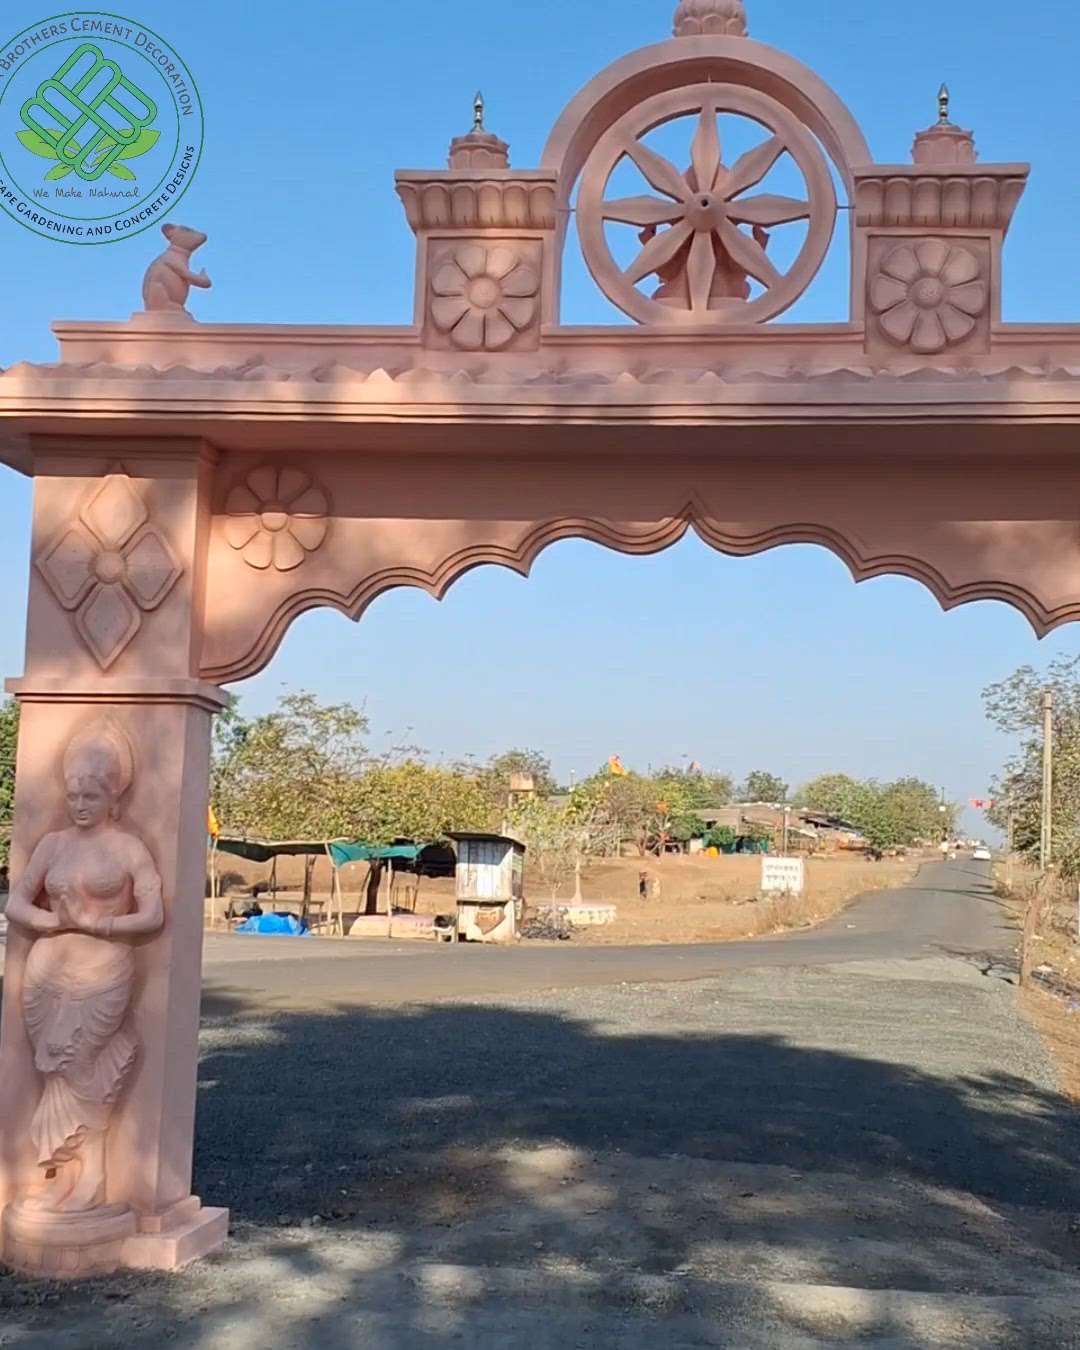 New Entrance gate design @ Forest Department rest house Padmalaya Dist.Jalgaon 

 #entrancegate  #entrancedecor  #Entrance  #cementartwork  #Ferrocement  #forest  #mirzabrotherscd  #mirzabrotherscementdecoration  #jalgaon